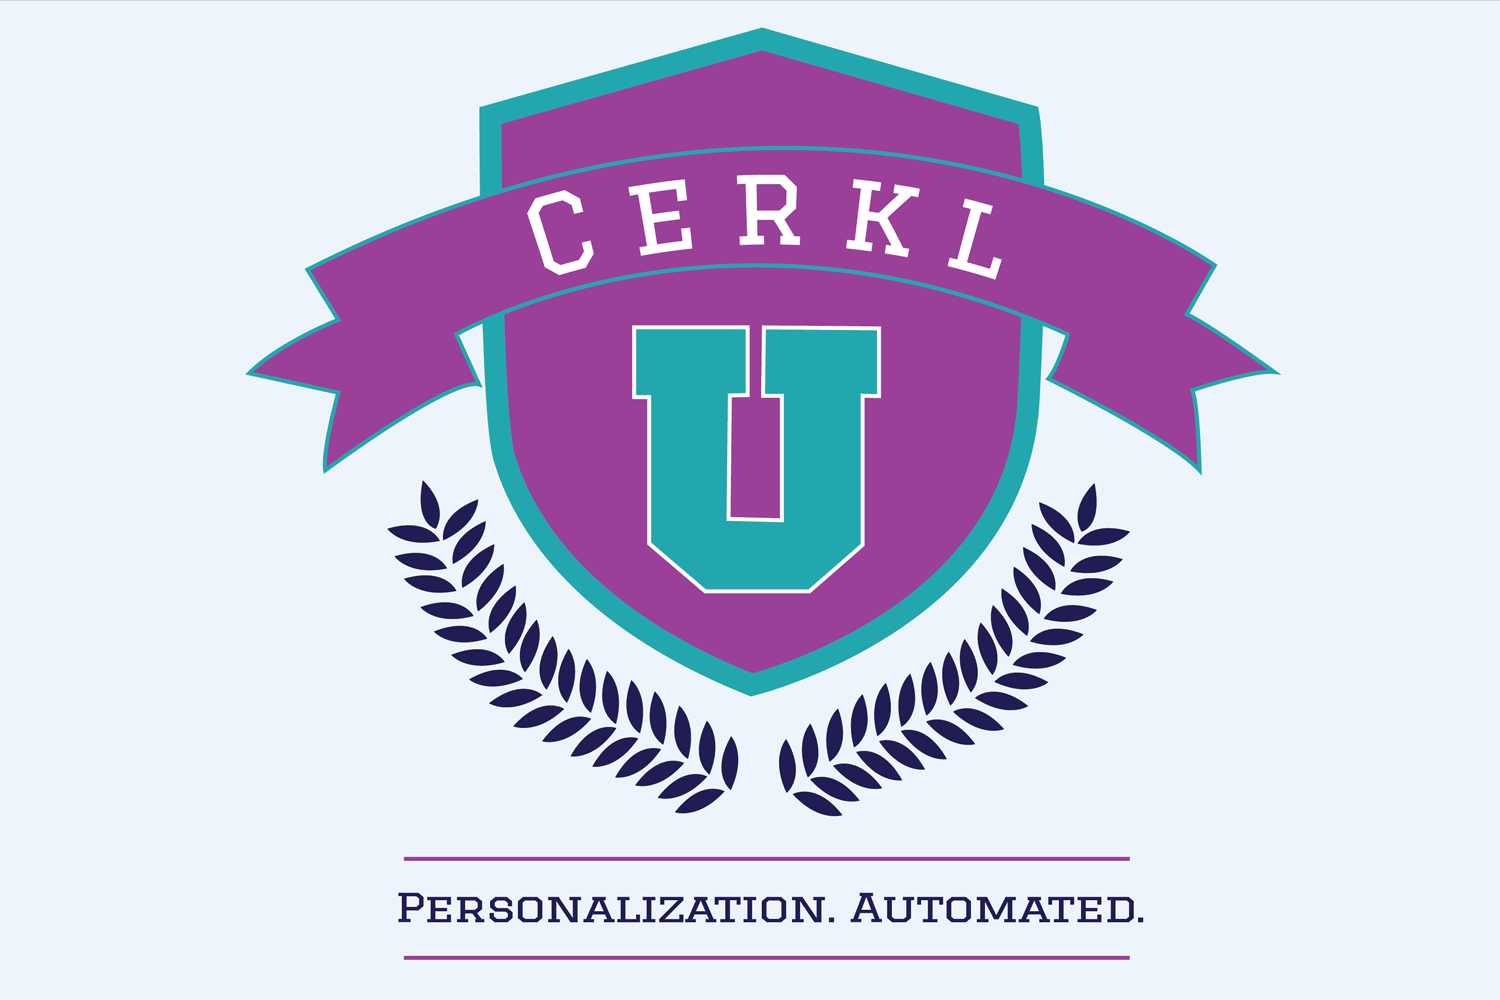 Cerkl U graphic logo